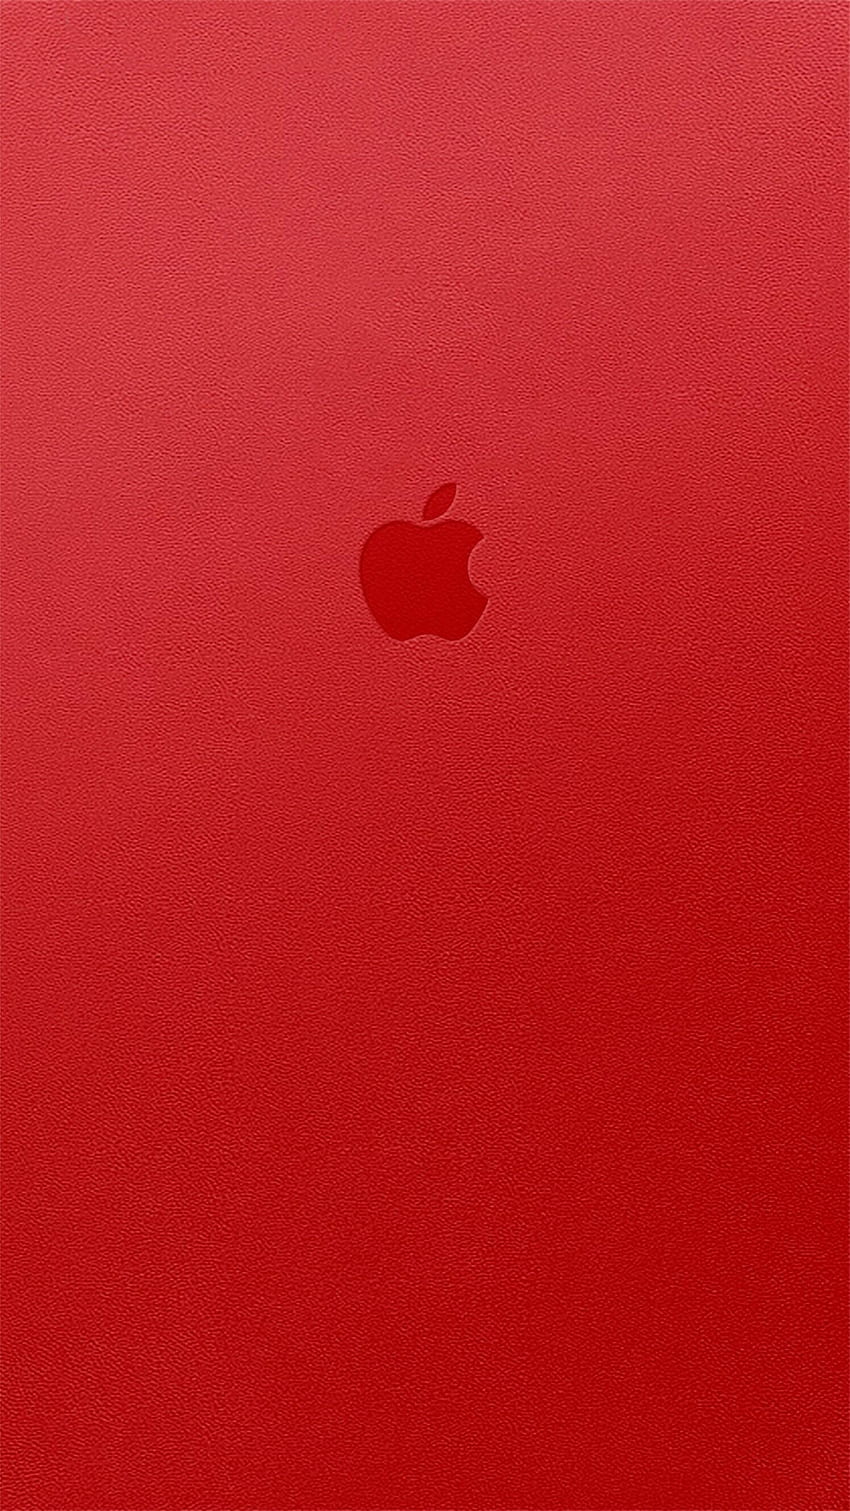 Apple iPhone 6s Plus Red HD phone wallpaper